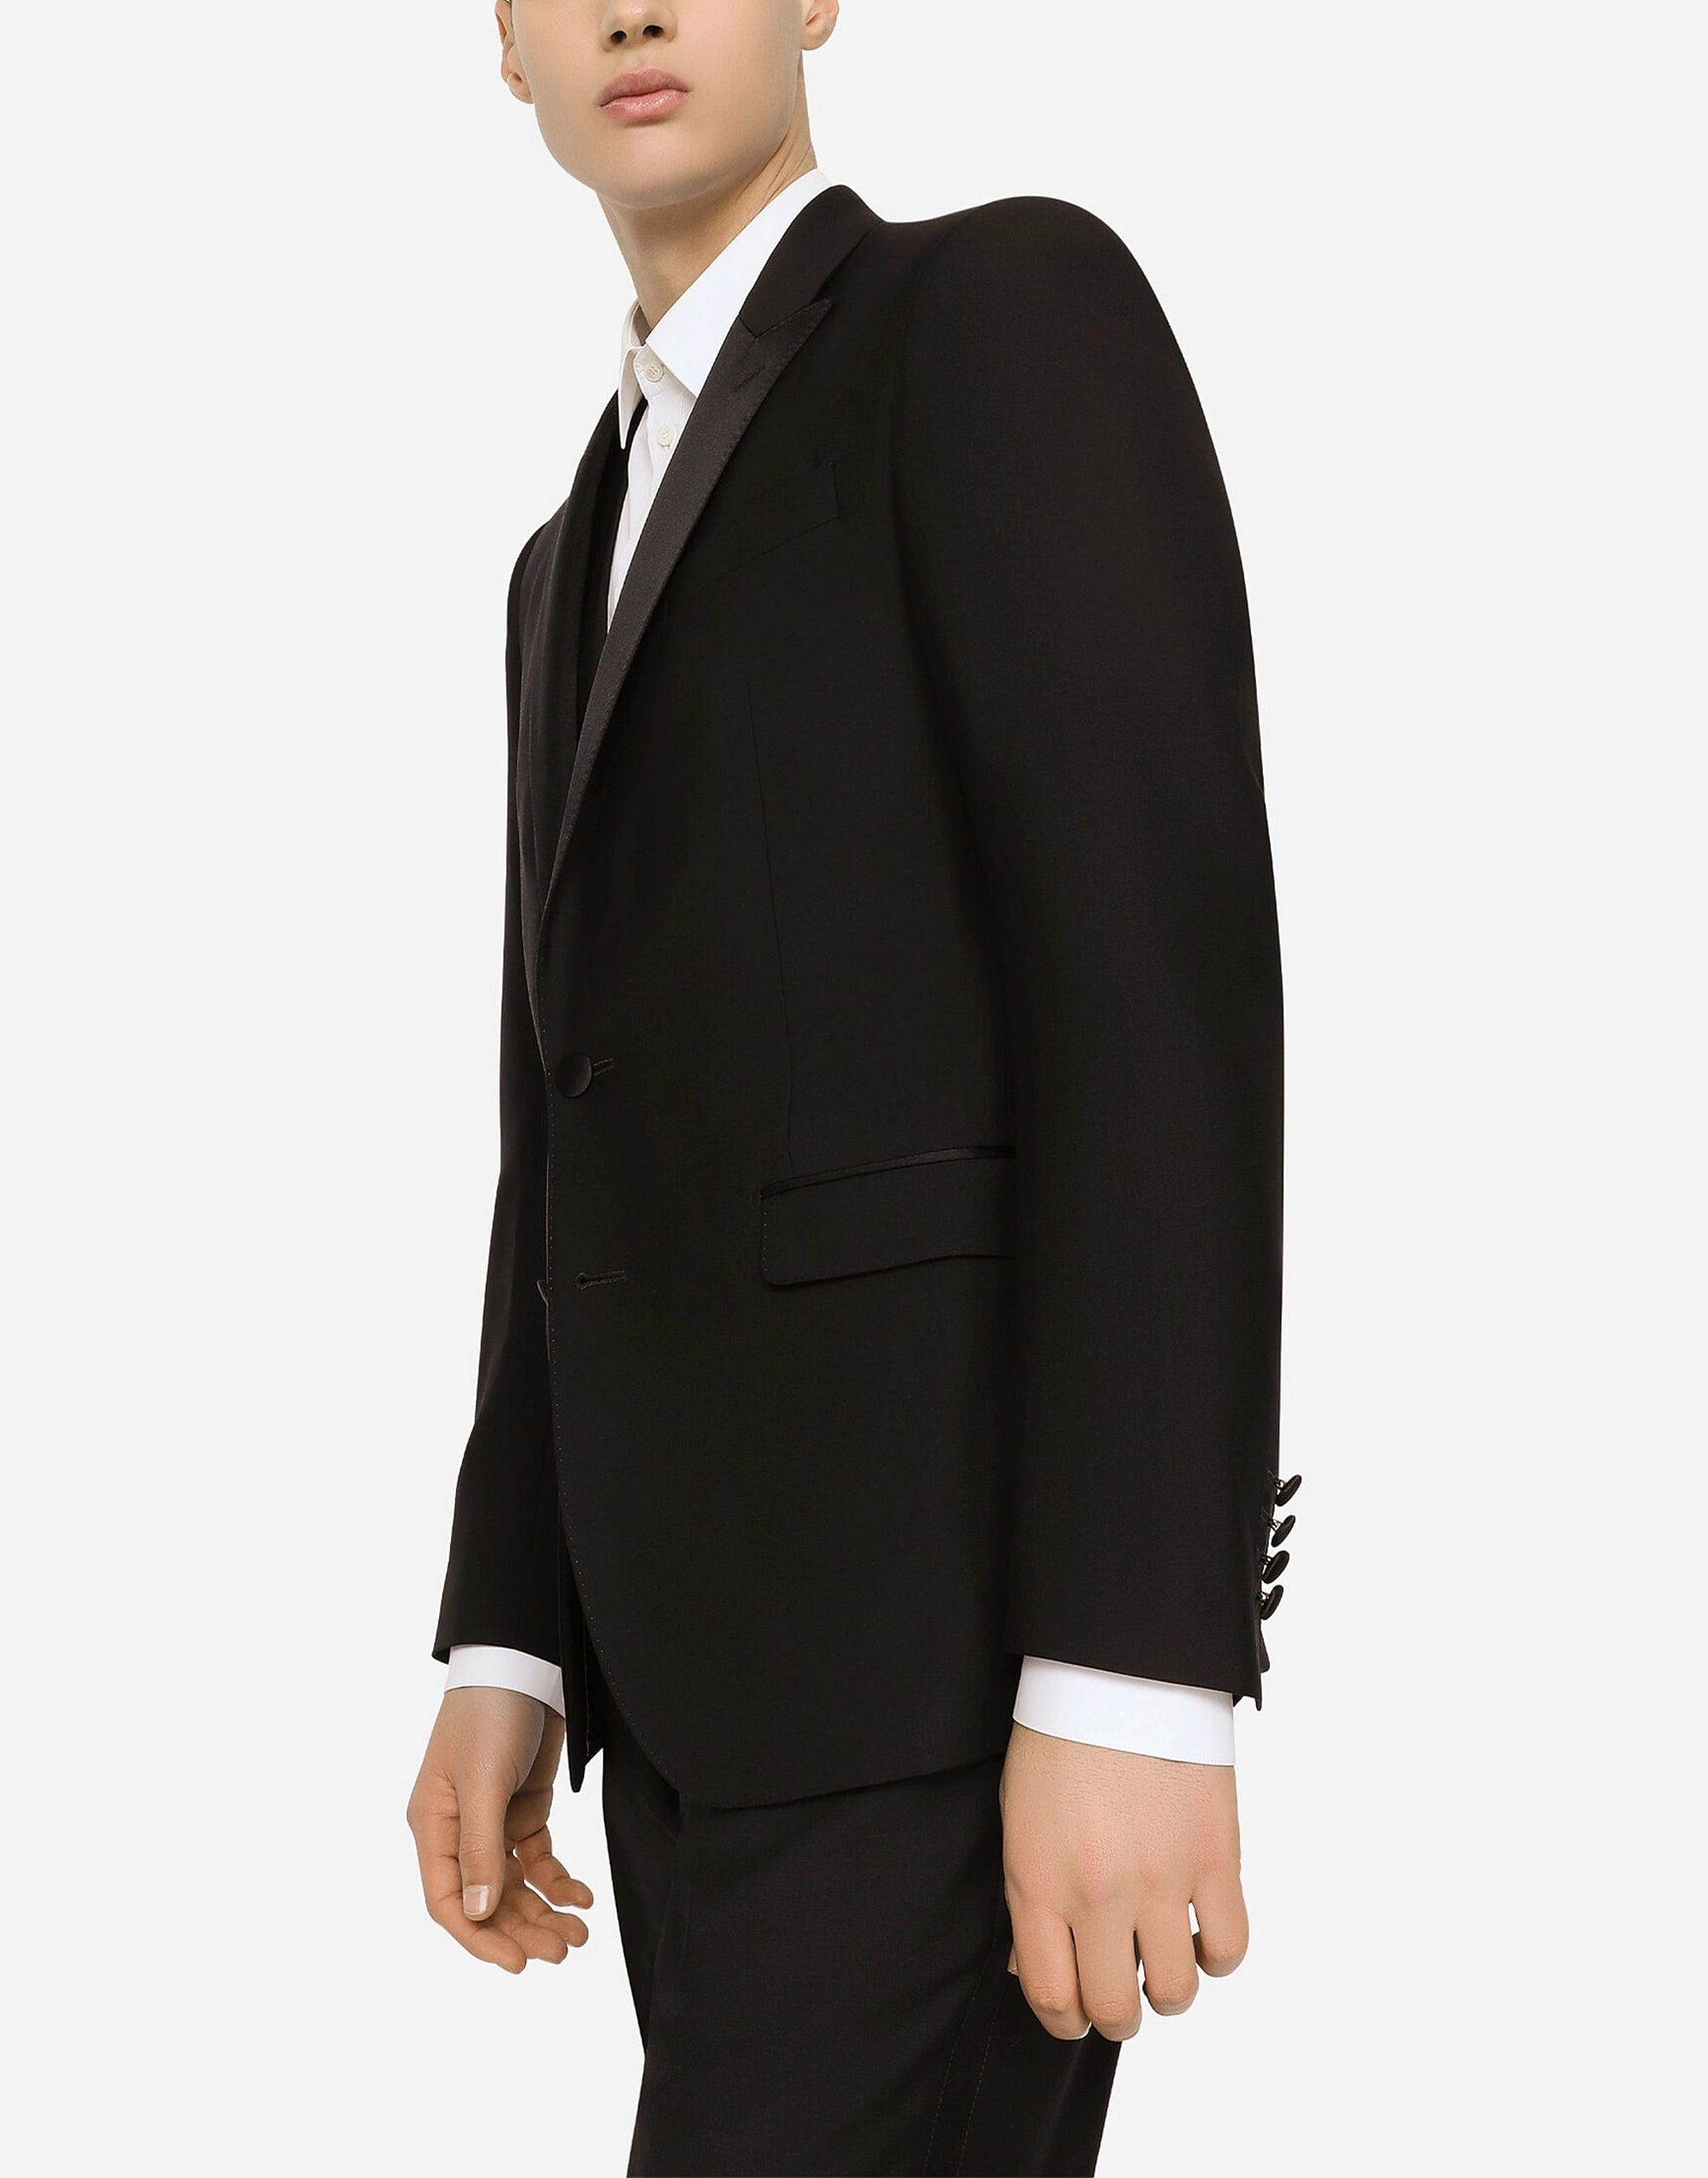 Dolce & Gabbana Wool And Silk Martini-Fit Tuxedo Jacket